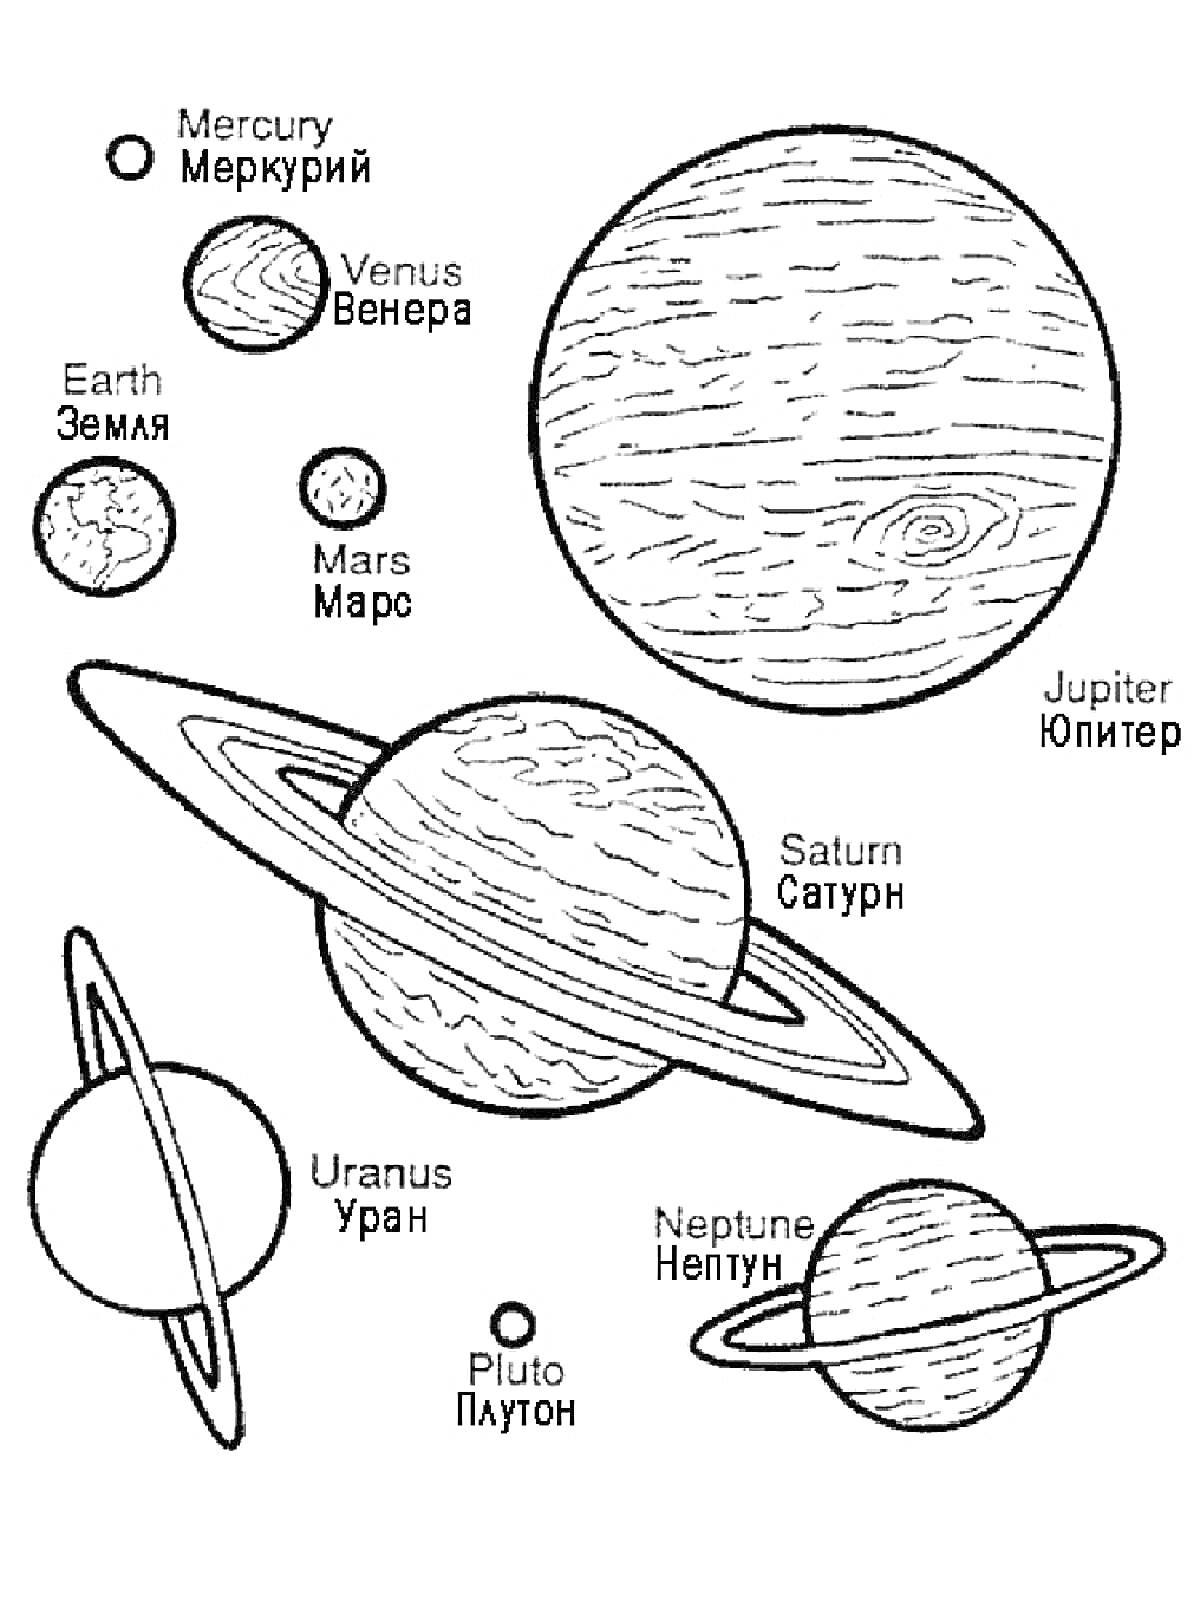 Планеты Солнечной системы – Меркурий, Венера, Земля, Марс, Юпитер, Сатурн, Уран, Нептун, Плутон